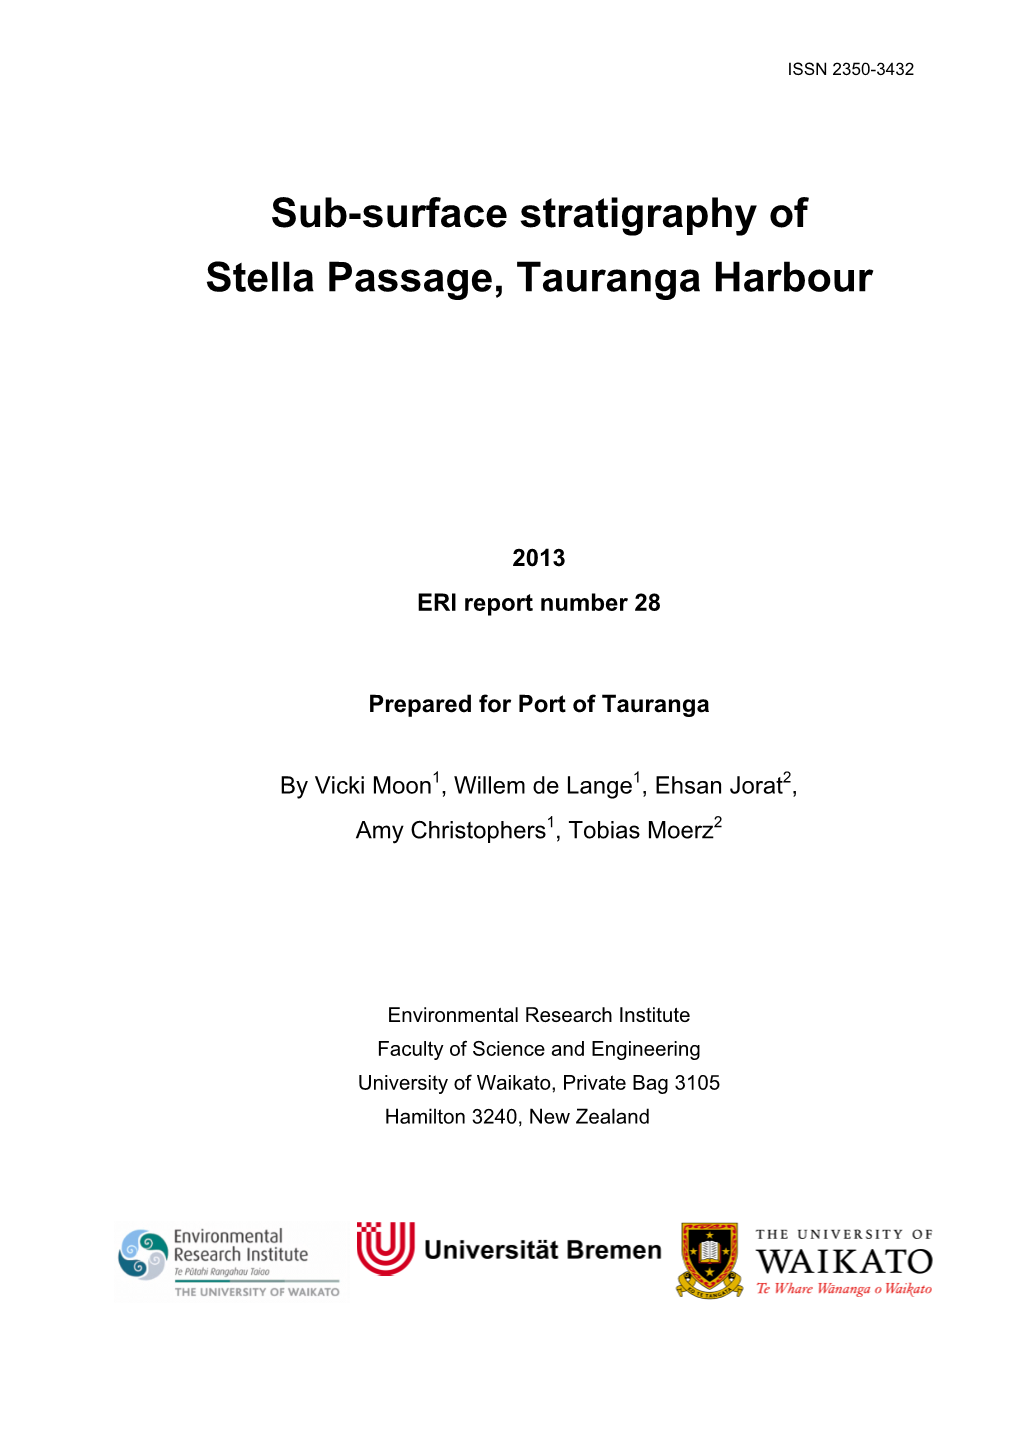 Sub-Surface Stratigraphy of Stella Passage, Tauranga Harbour